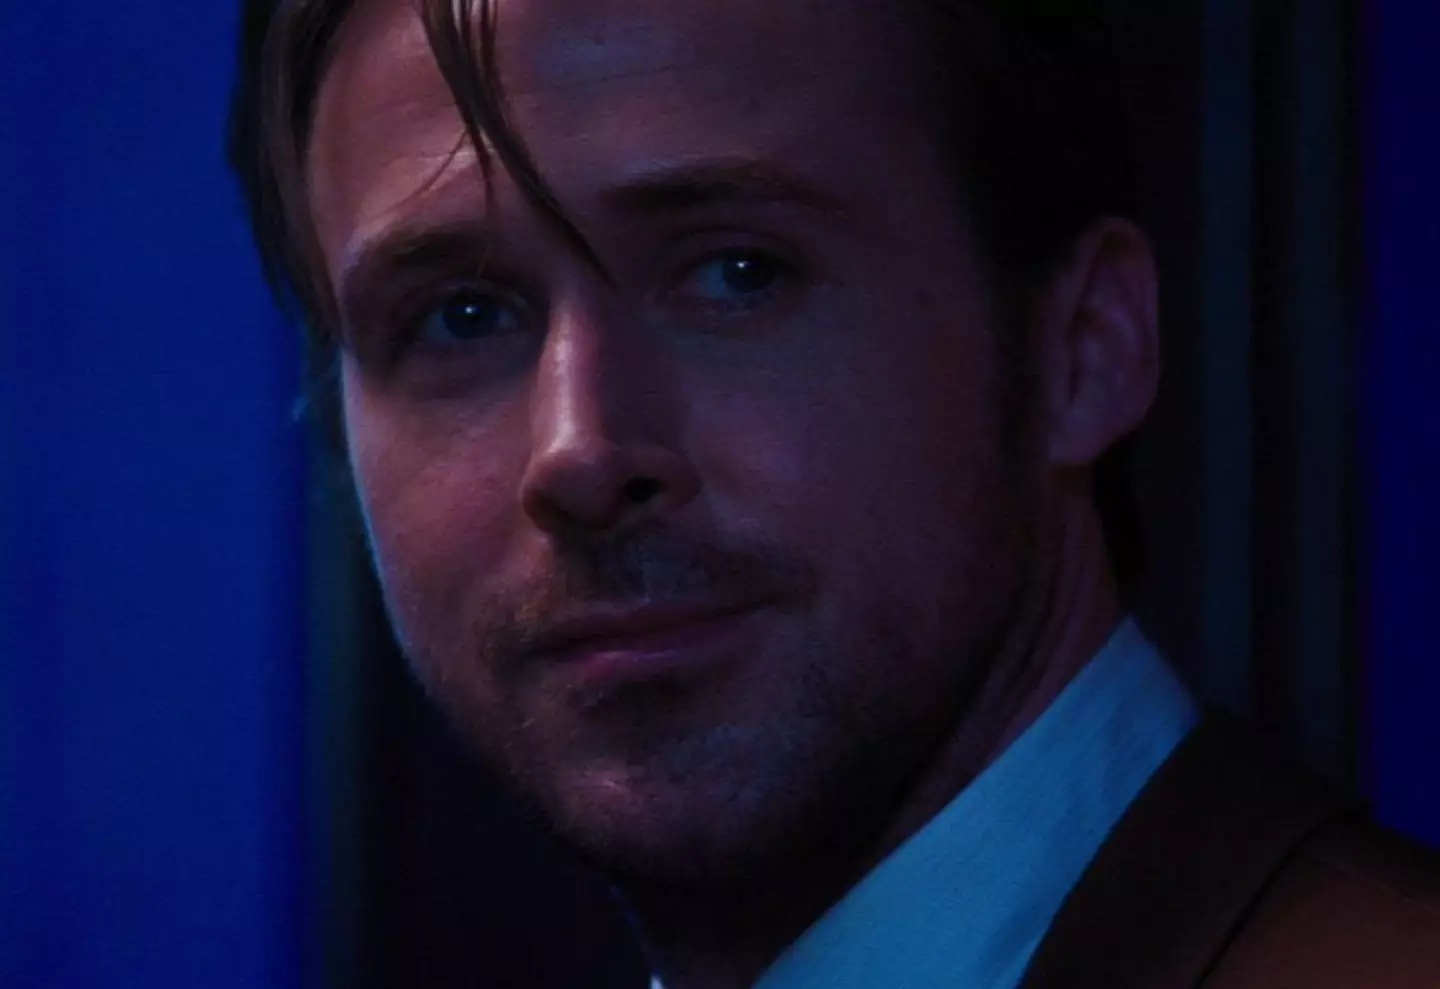 Ryan Gosling showed a similar face in La La Land.